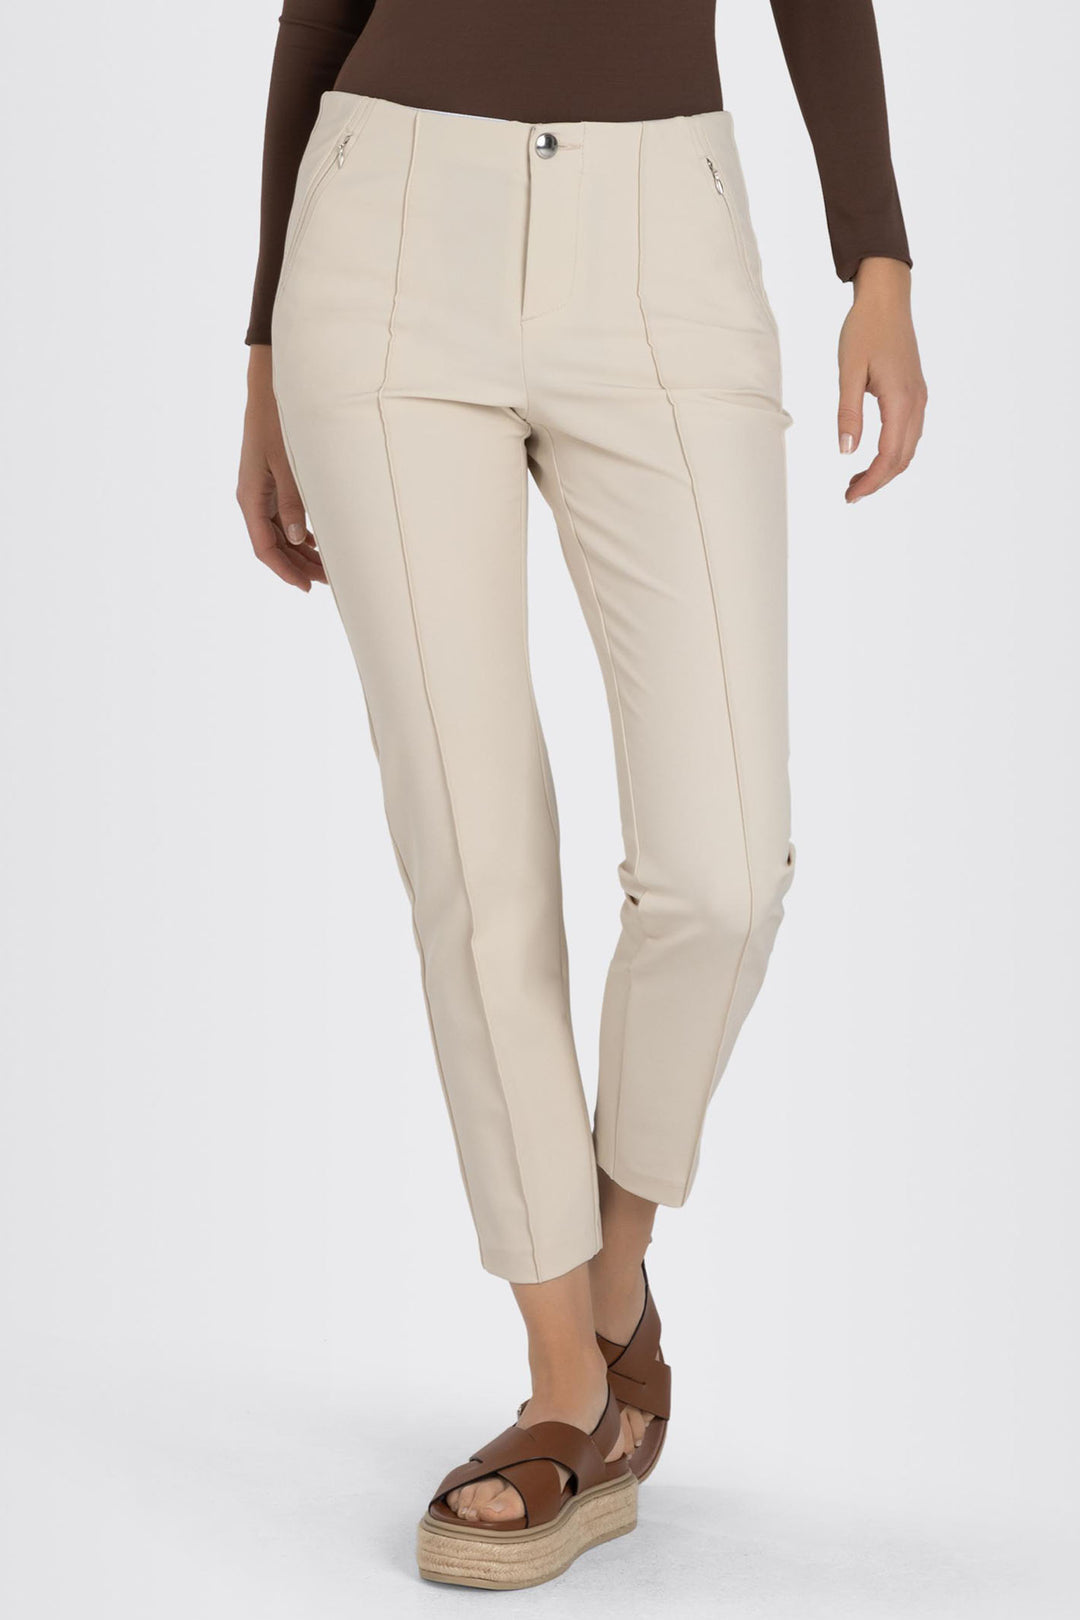 Mac 5293-00-0130 208 Anna Ivory Comfort Bistretch Trousers - Olivia Grace Fashion